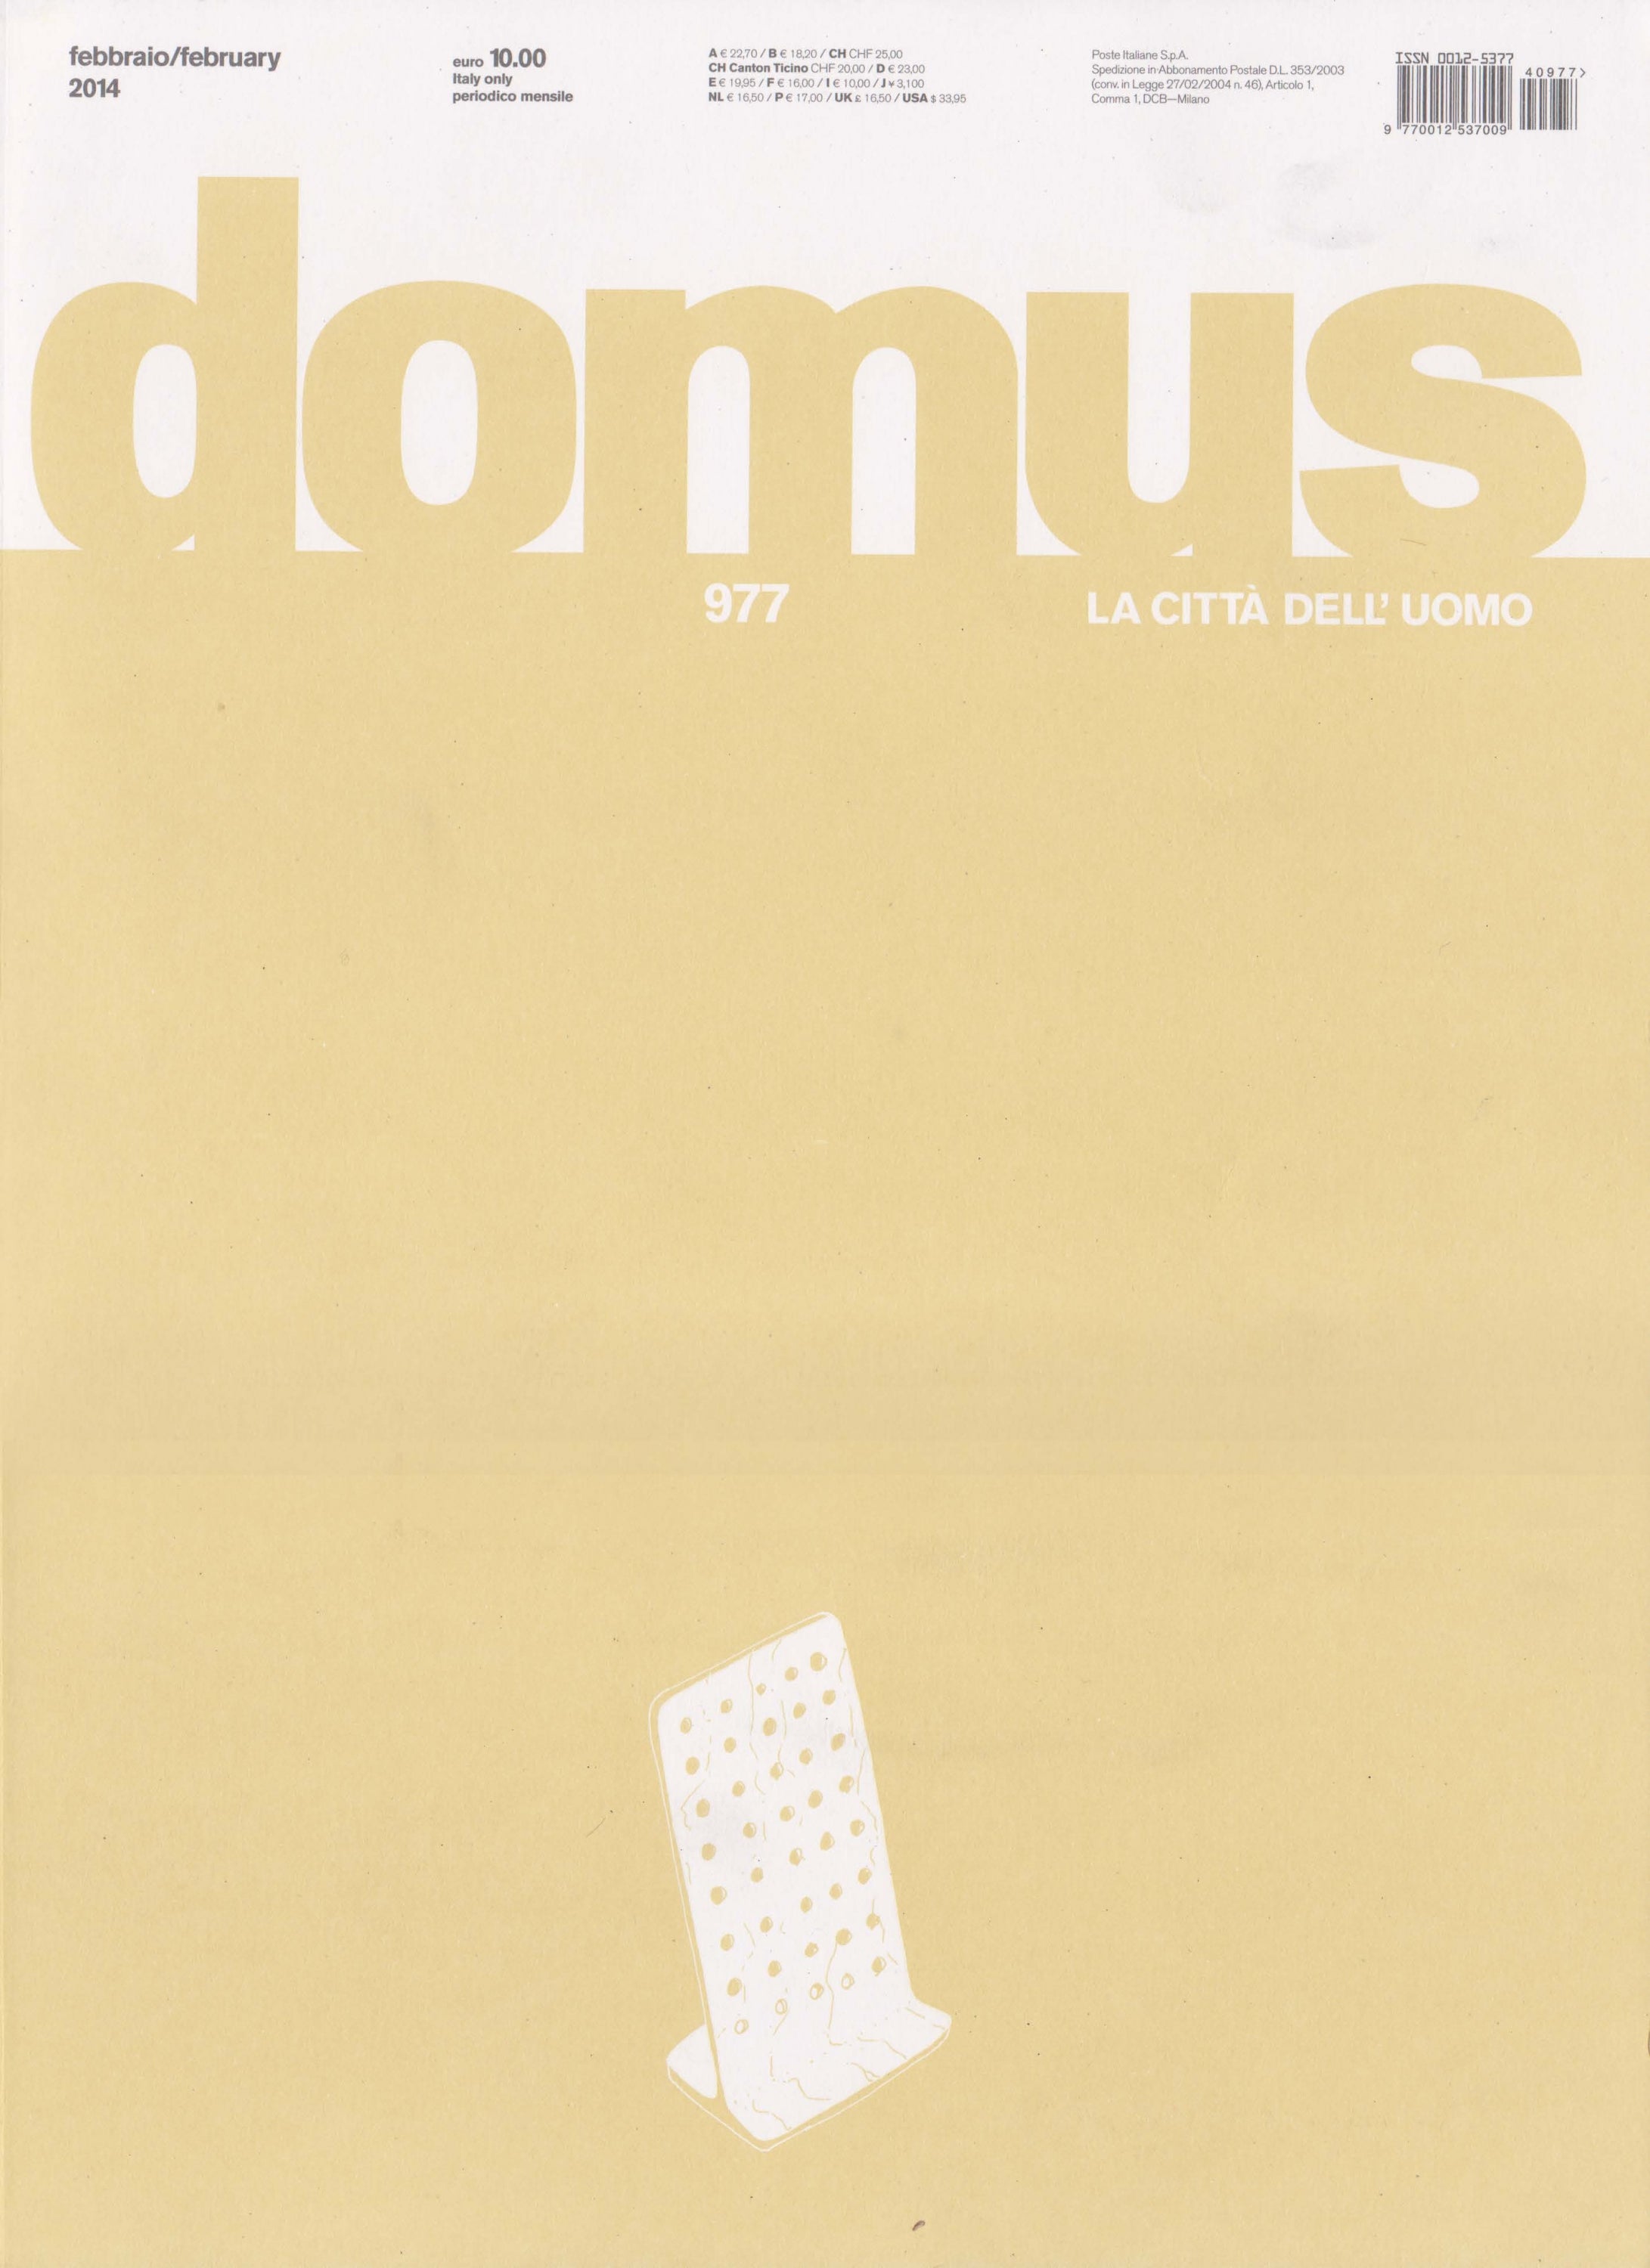 Domus magazine cover